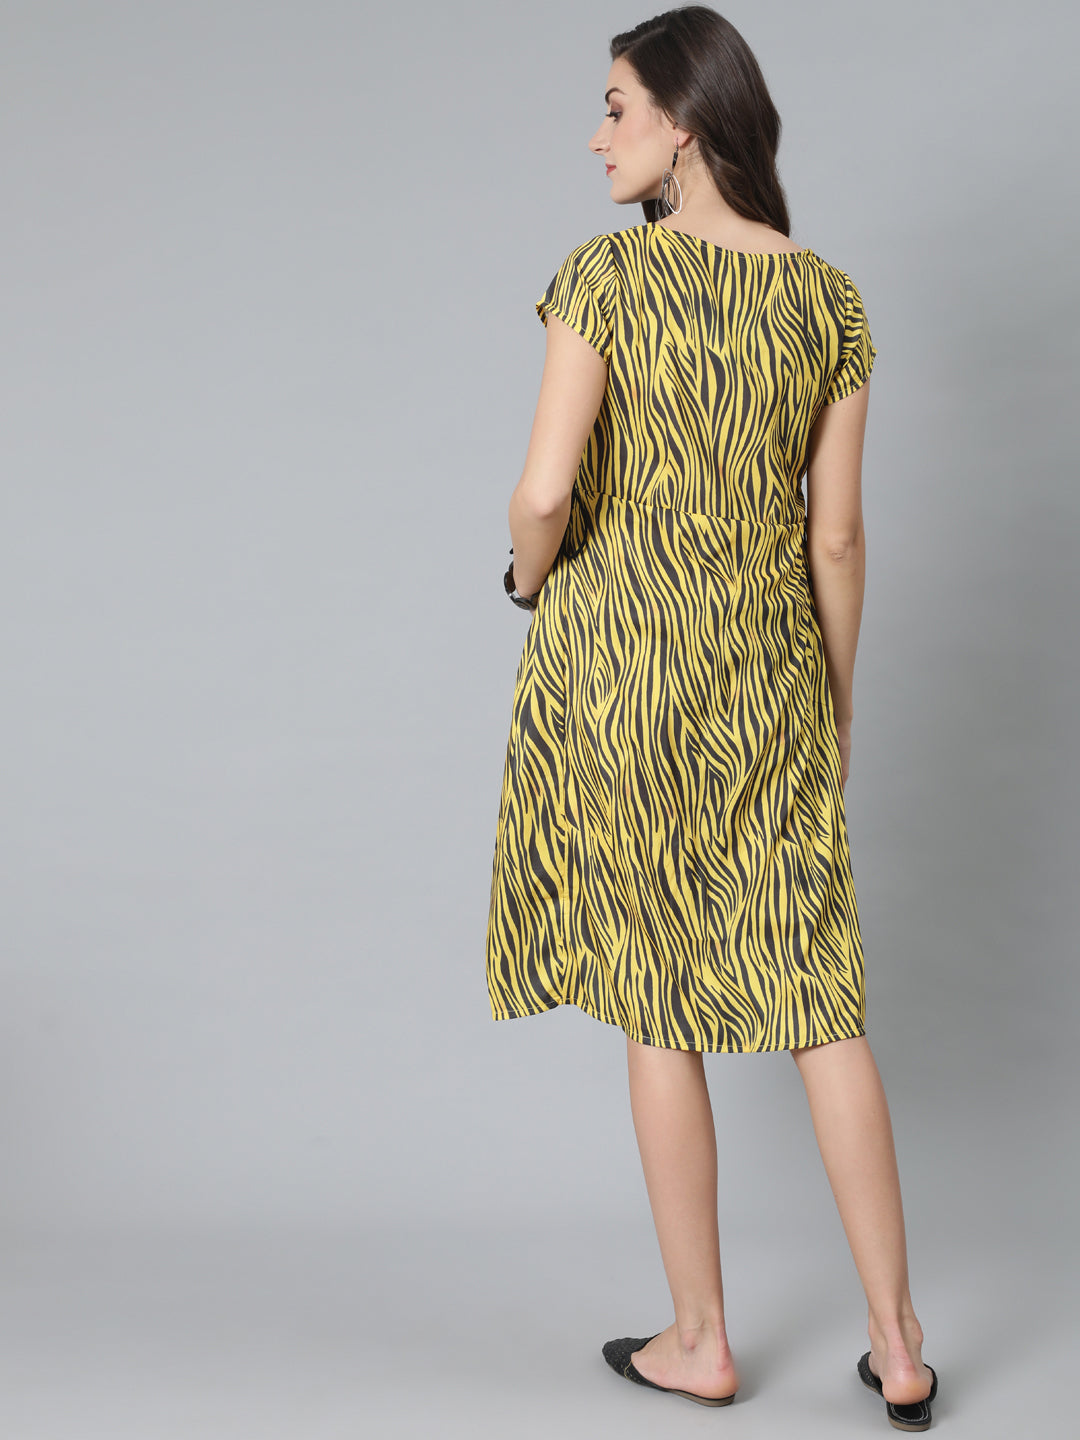 Women's Yellow & Black Animal Print Dress - Aks